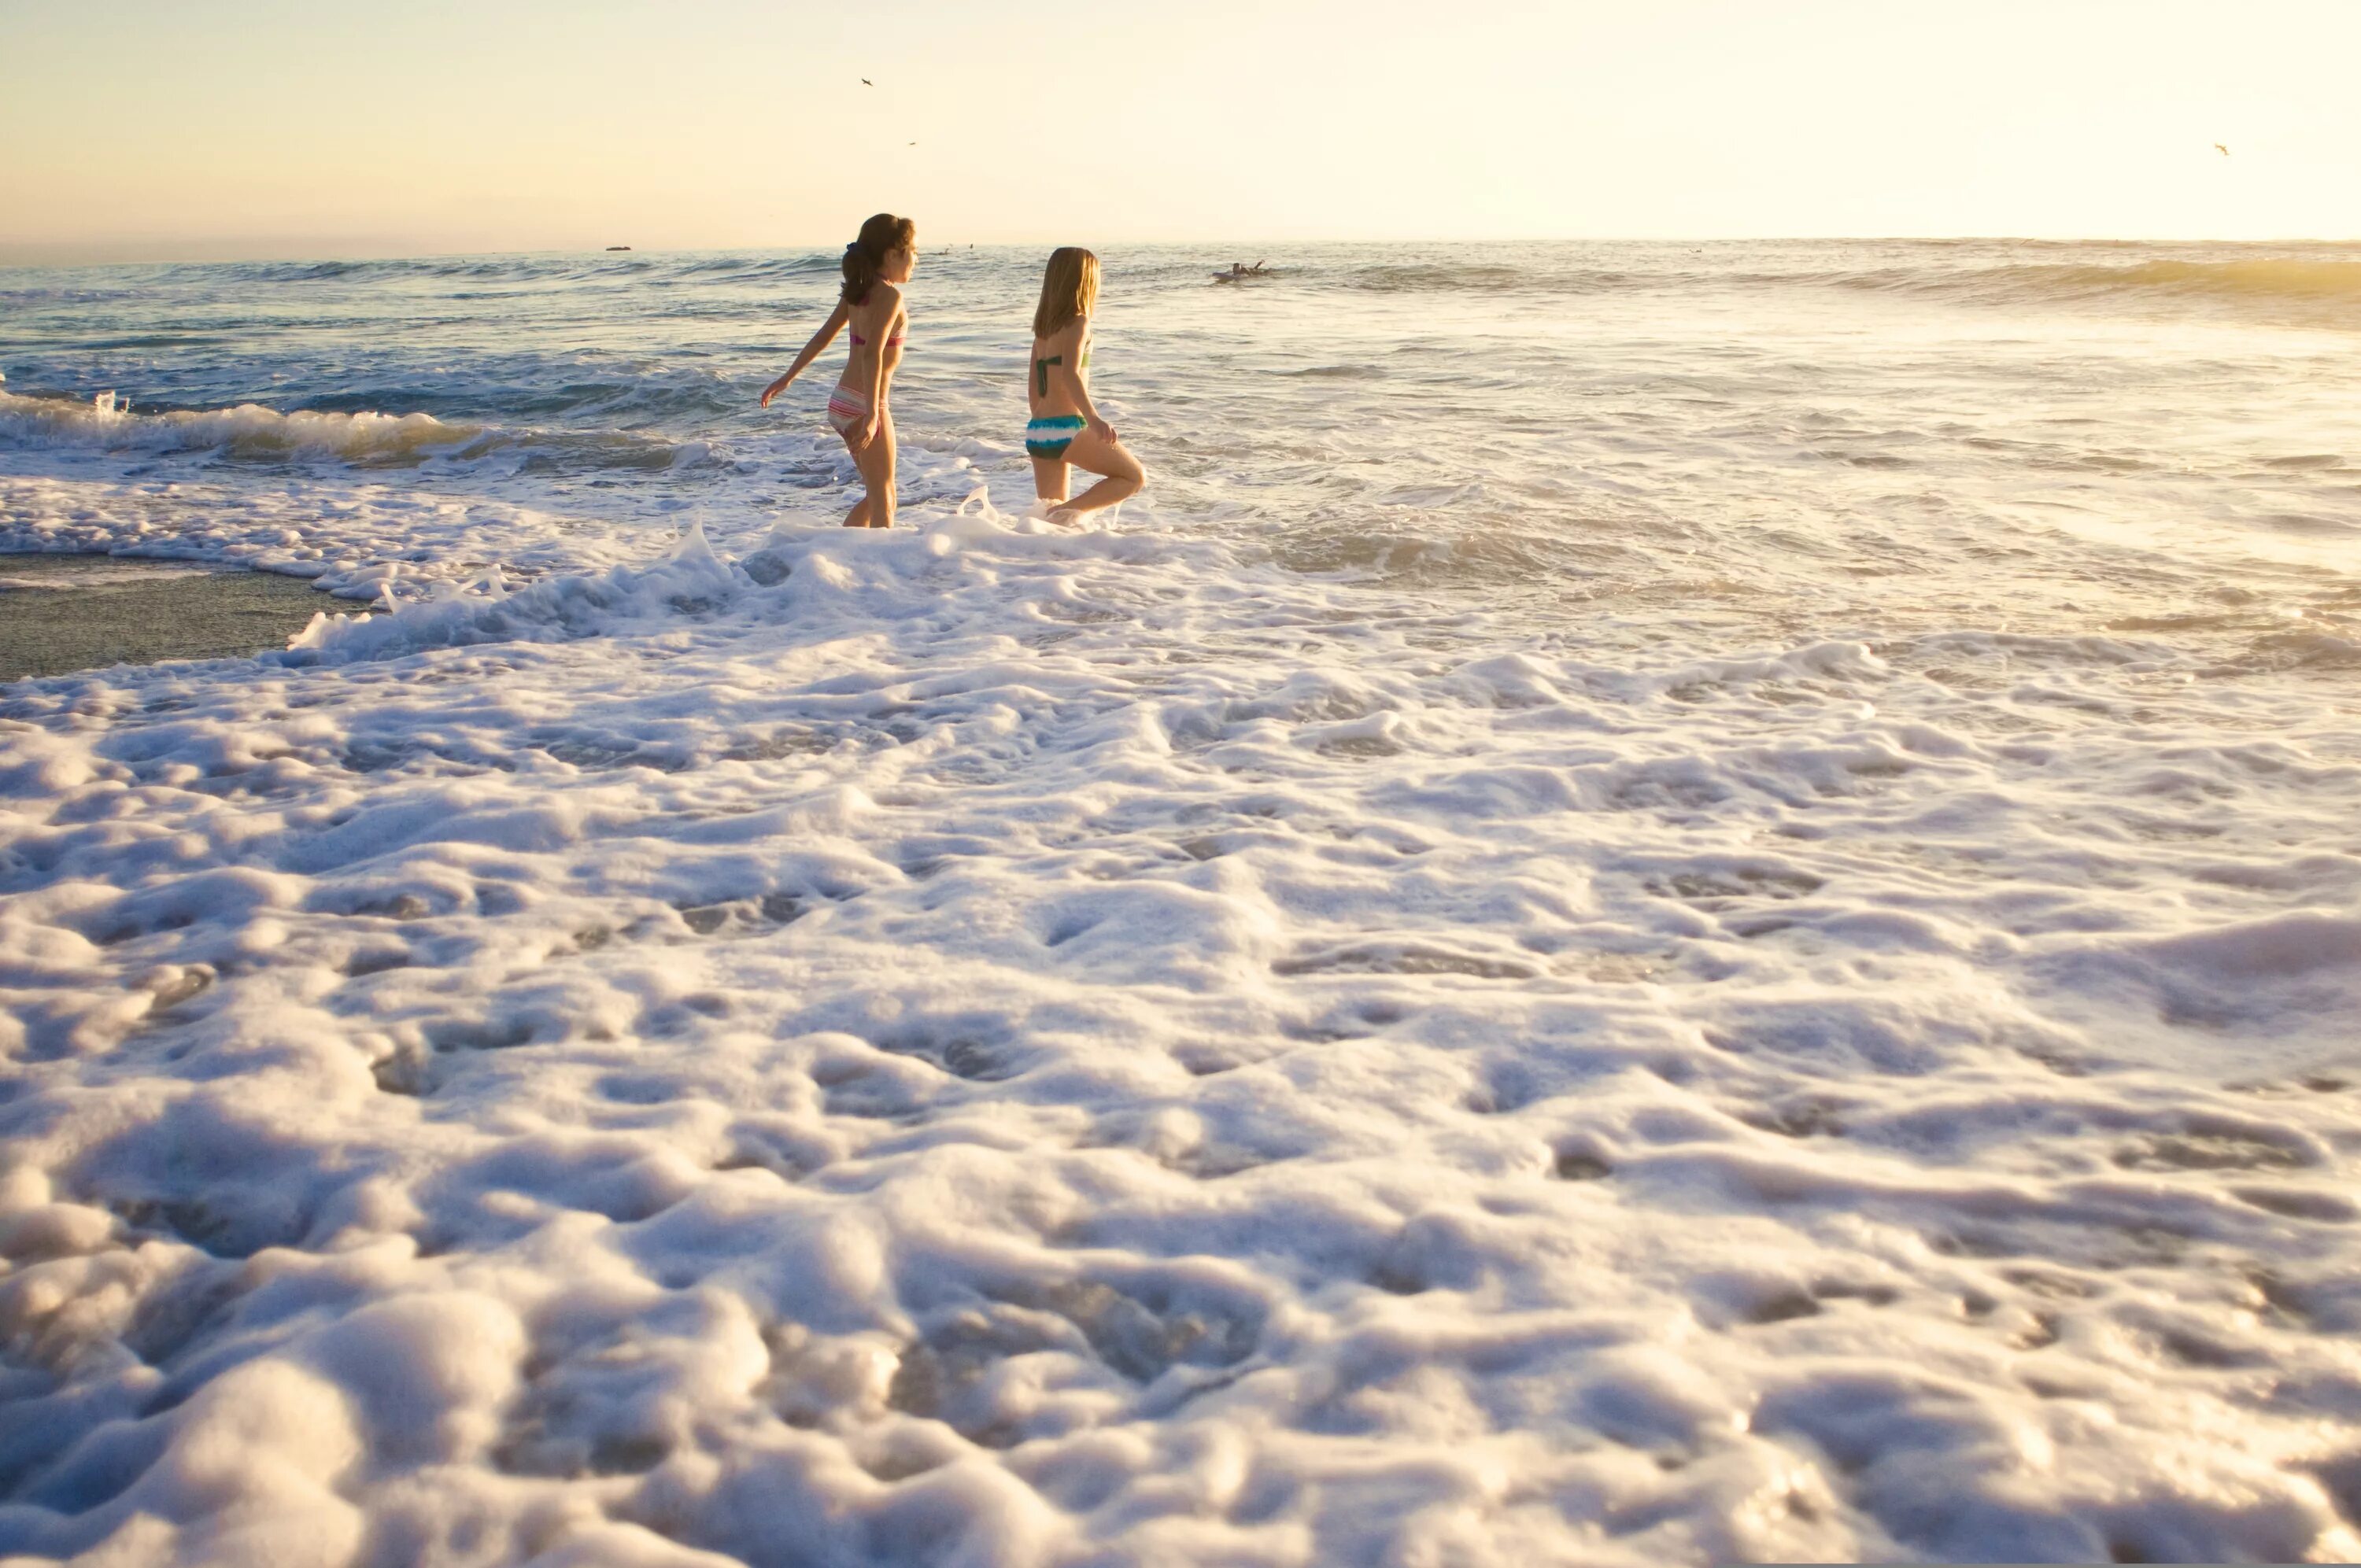 Девушка-море. Лето море. Фотосессия на море. Море пляж девушки. Май лав где то в далеке